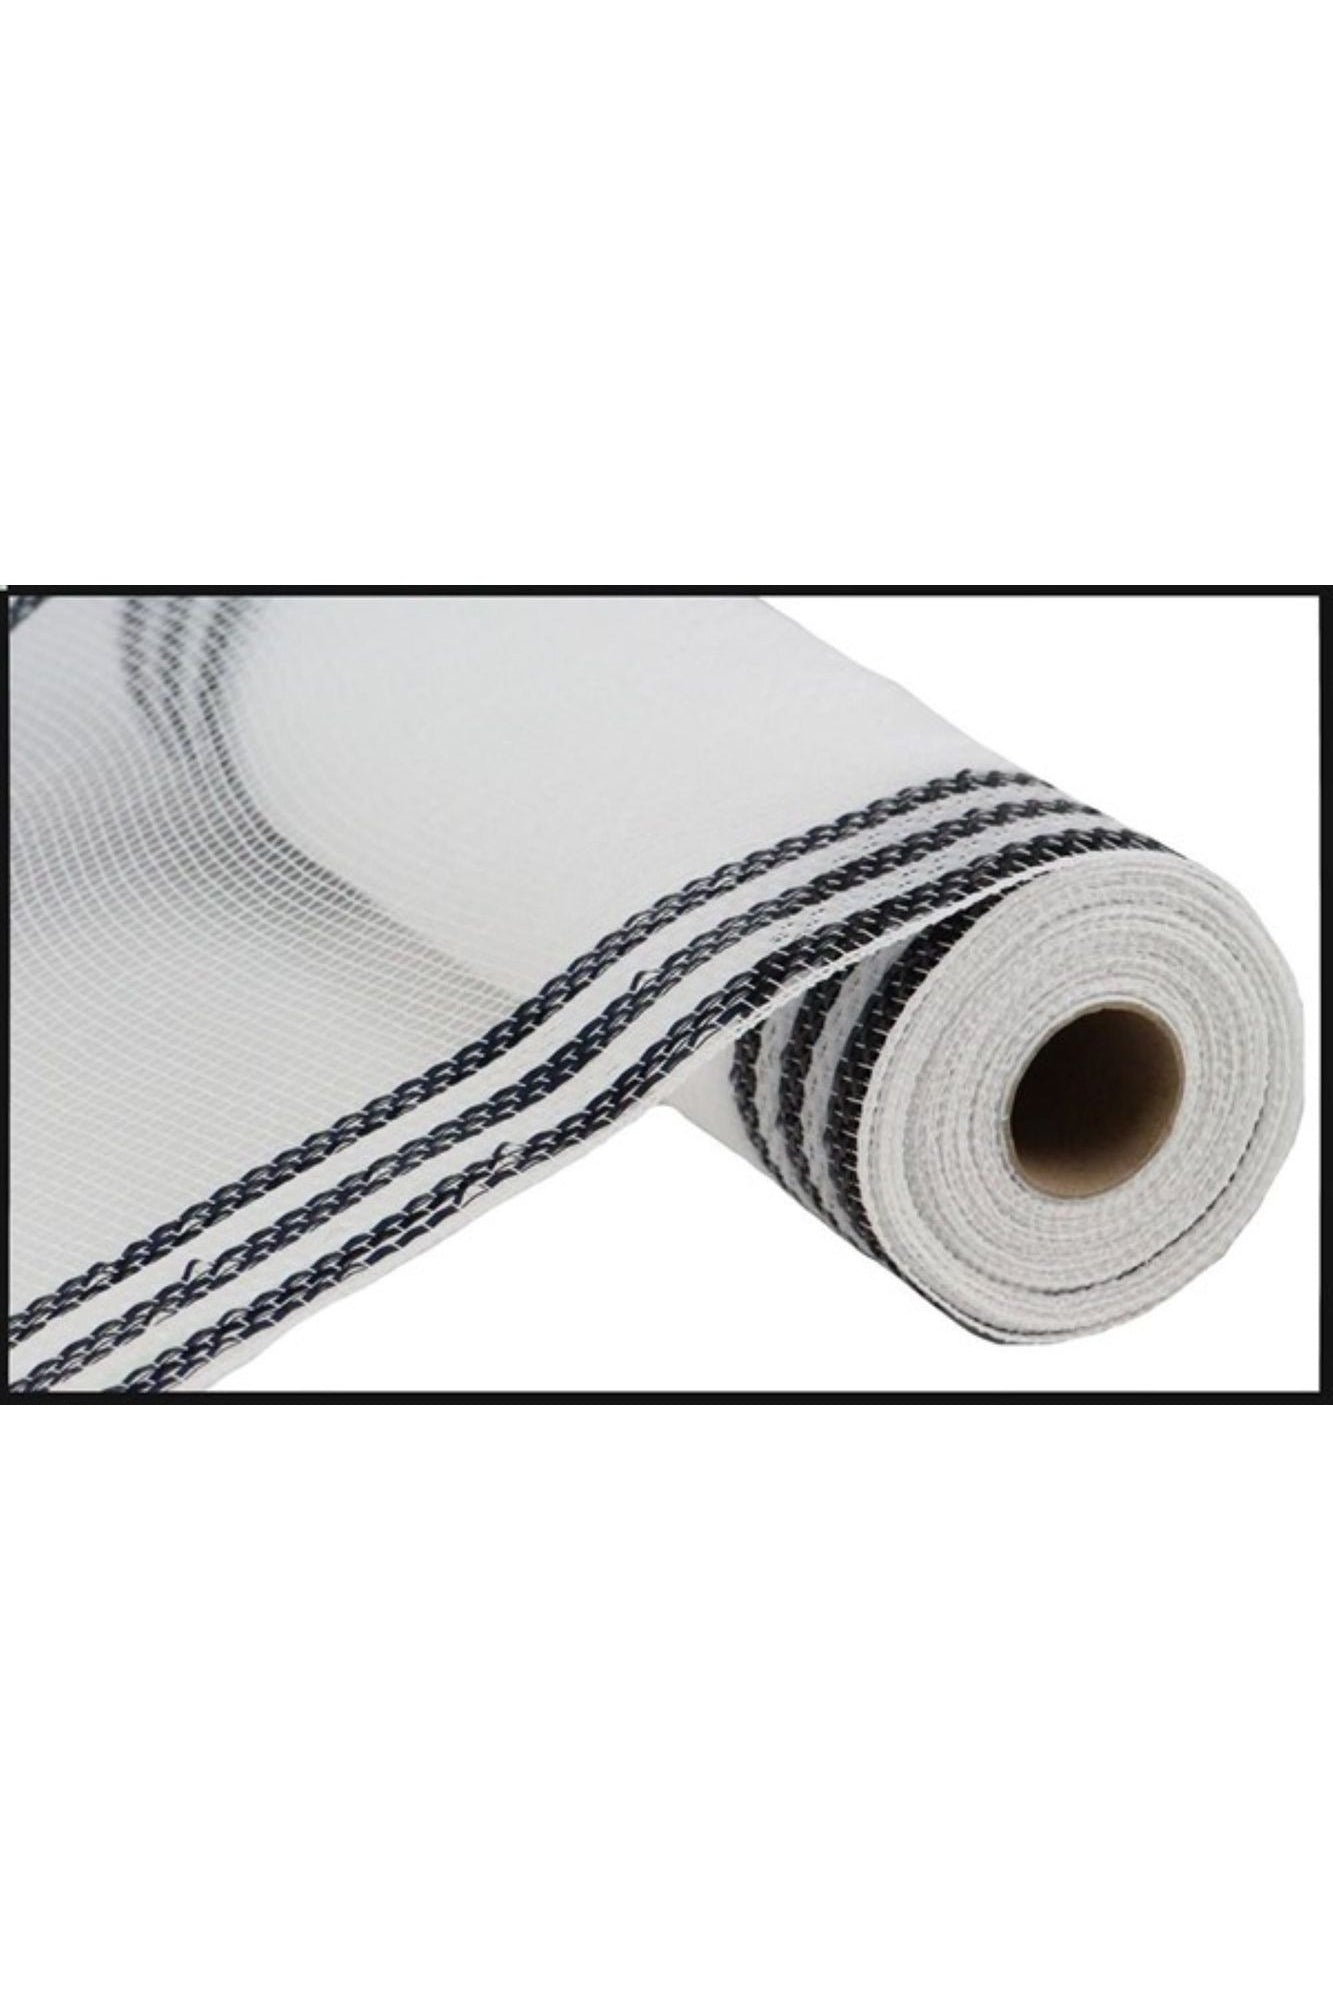 Shop For 10" Border Stripe Metallic Mesh: White/Black (10 Yards) RE8503F6